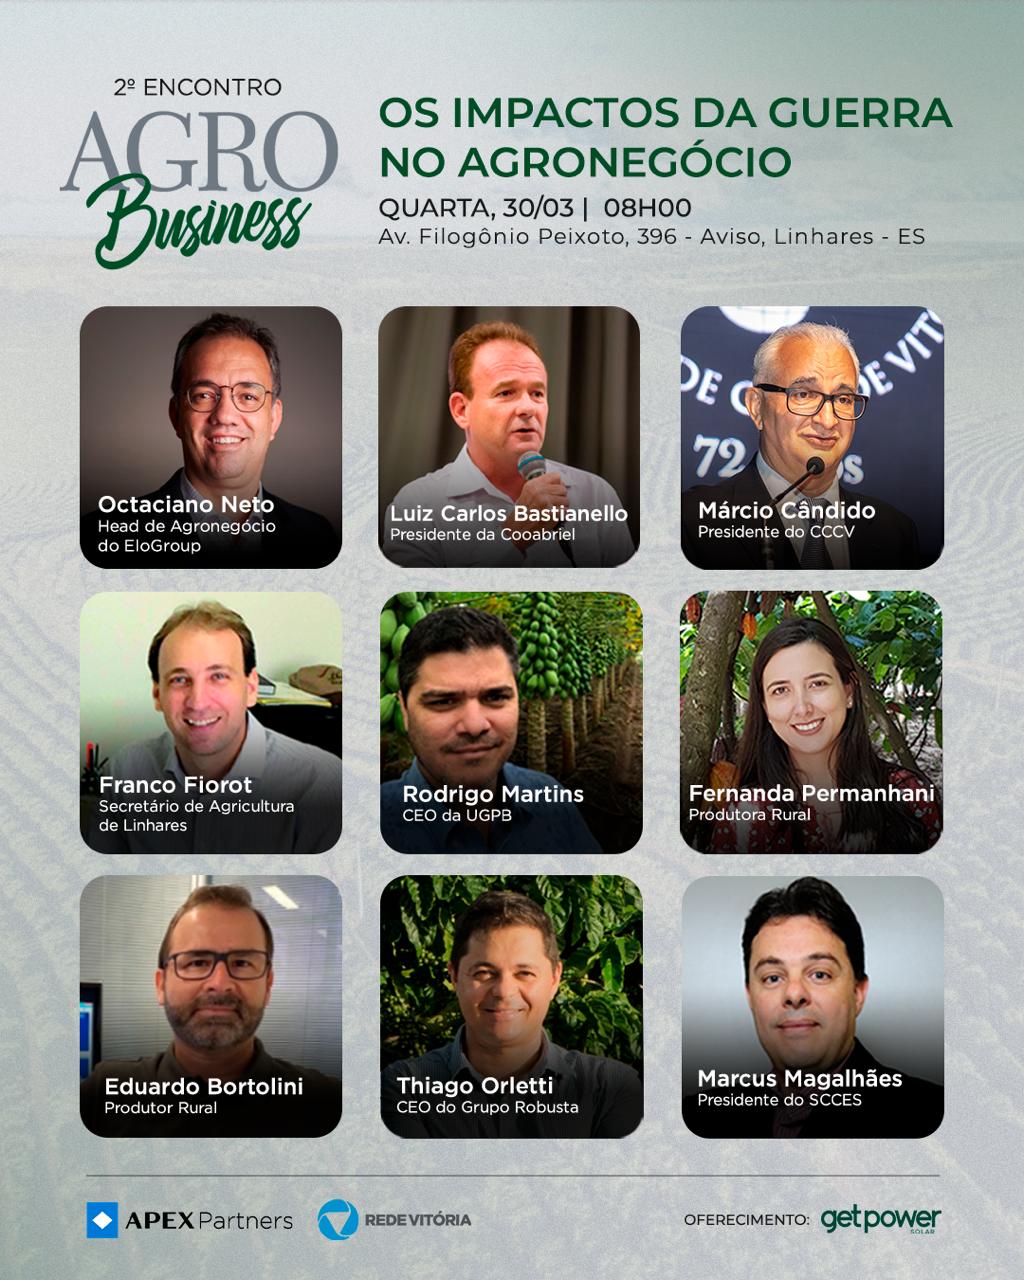 Agro Business - Folha Vitória